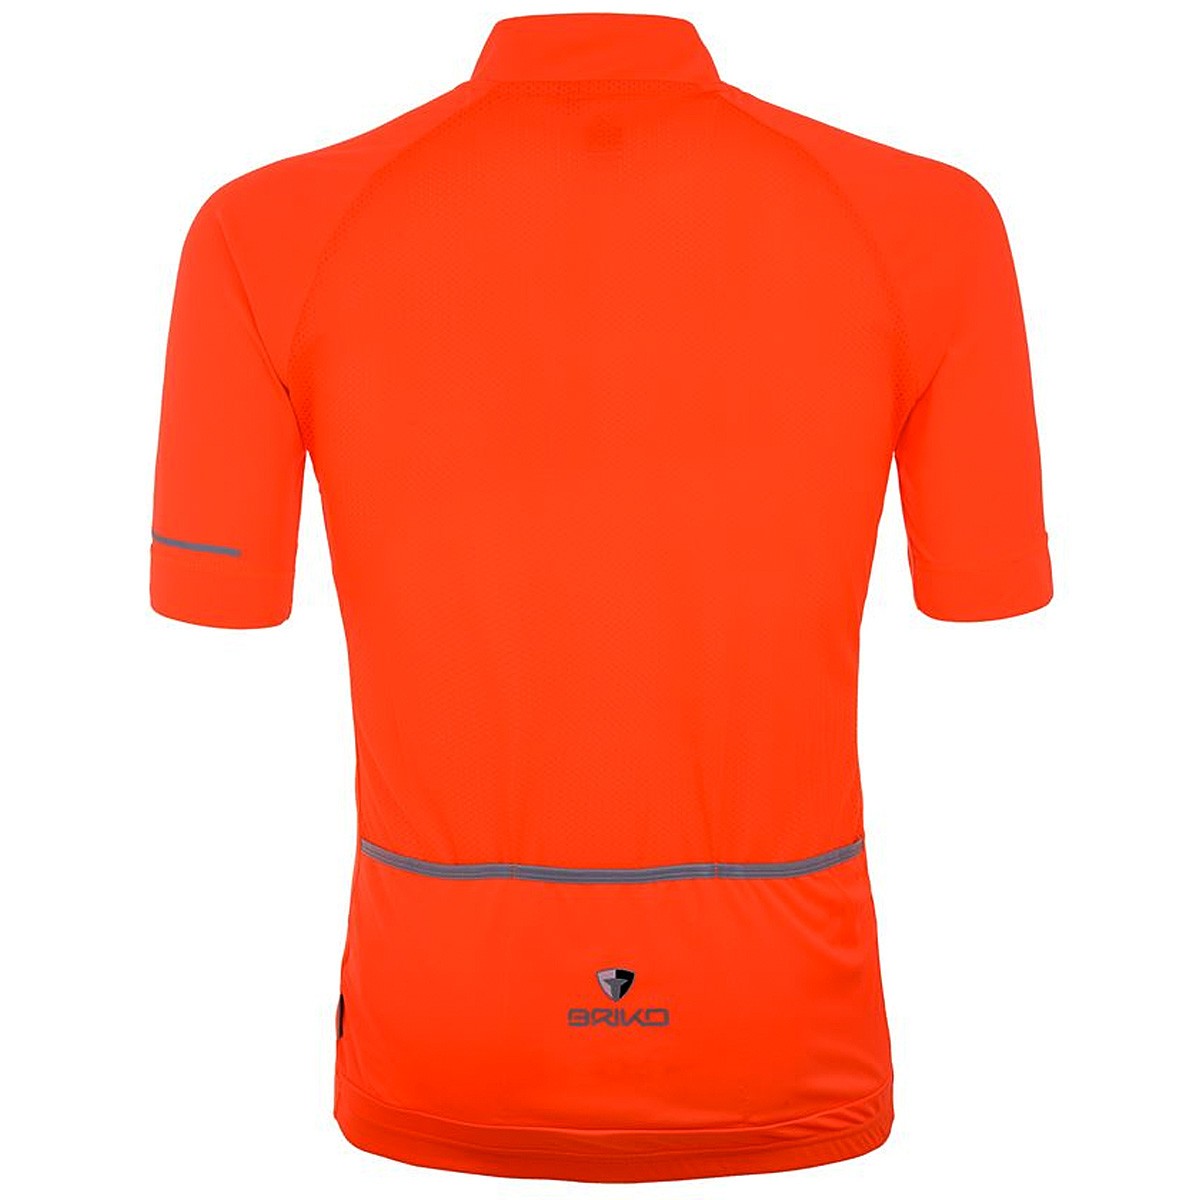 Briko T-shirt sportiva Uomo CORSA JERSEY Ciclismo sport Camicia